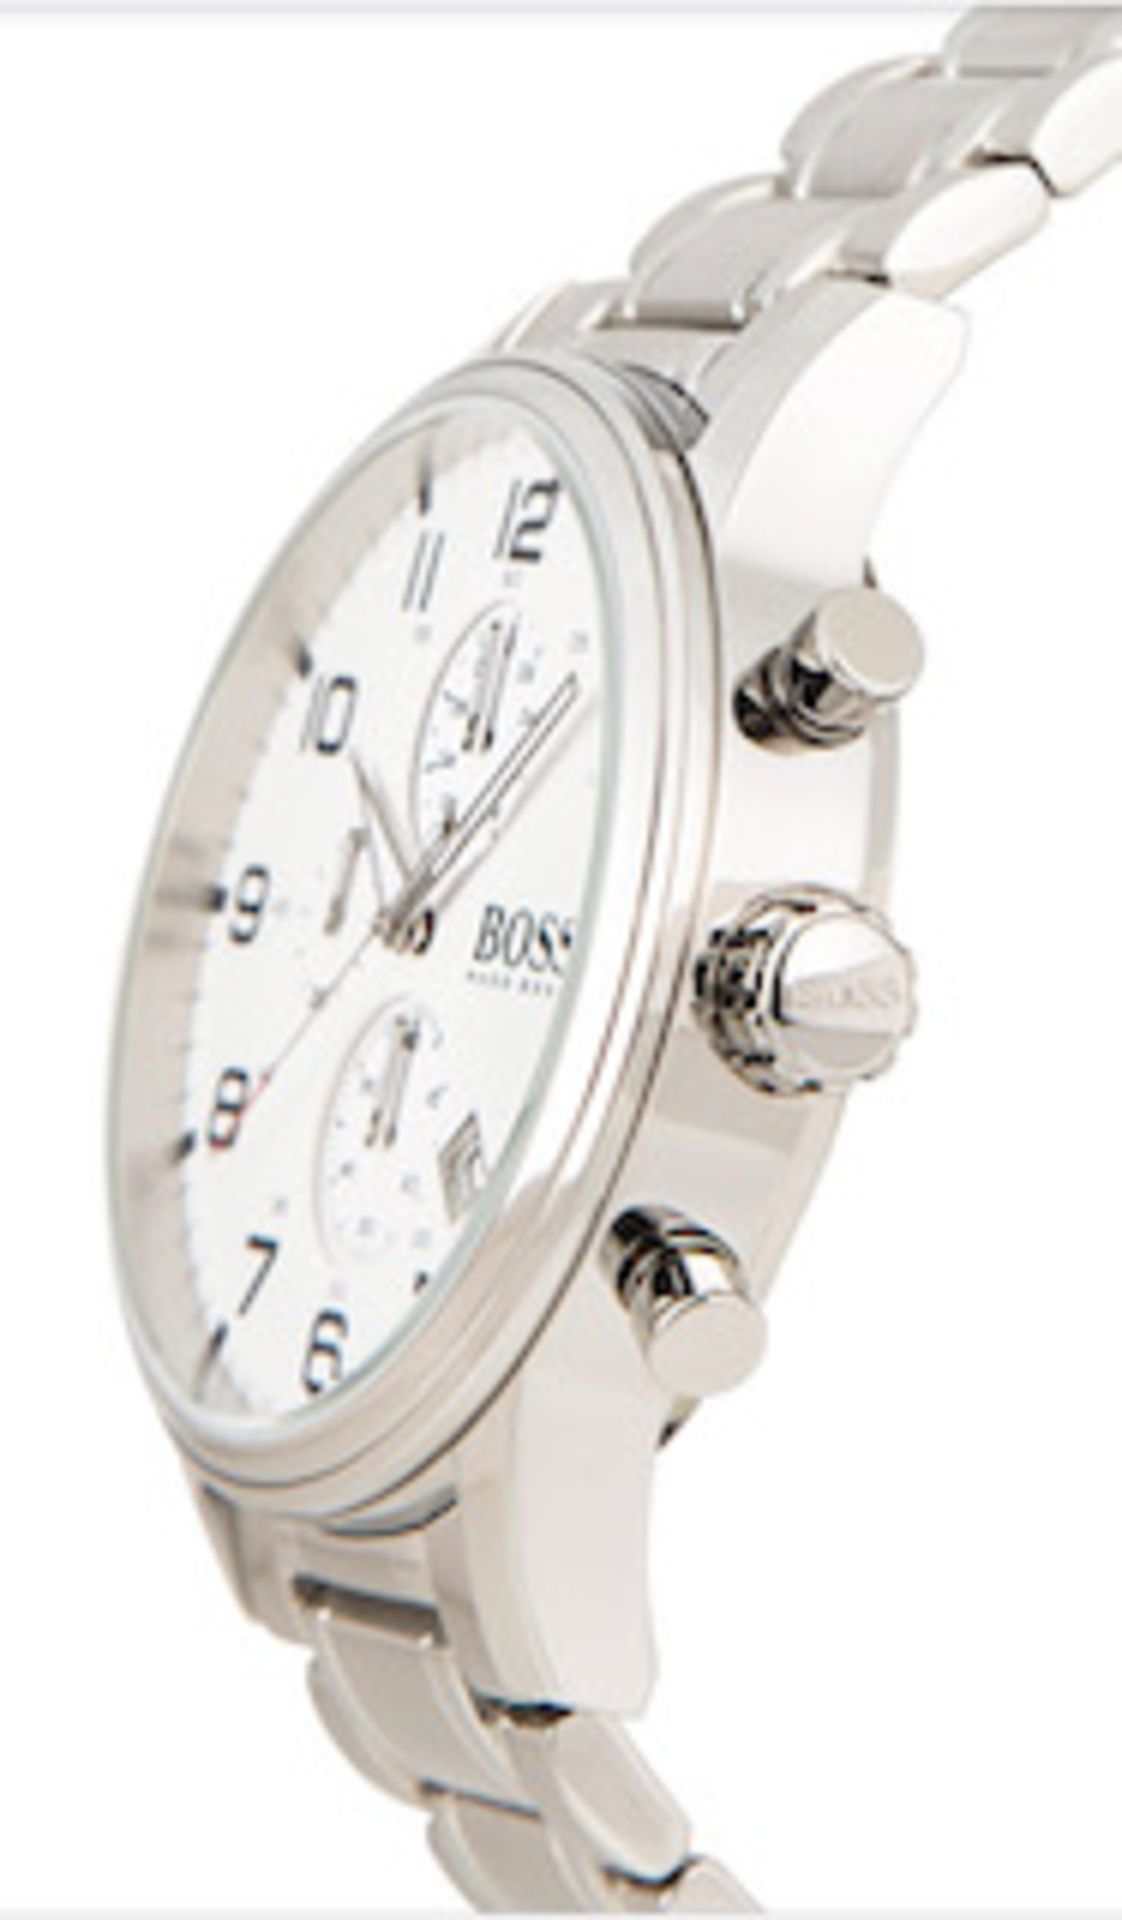 Hugo Boss Men's Aeroliner Silver Bracelet Chronograph Watch 1513182 Authentic Men's Classic - Image 6 of 7